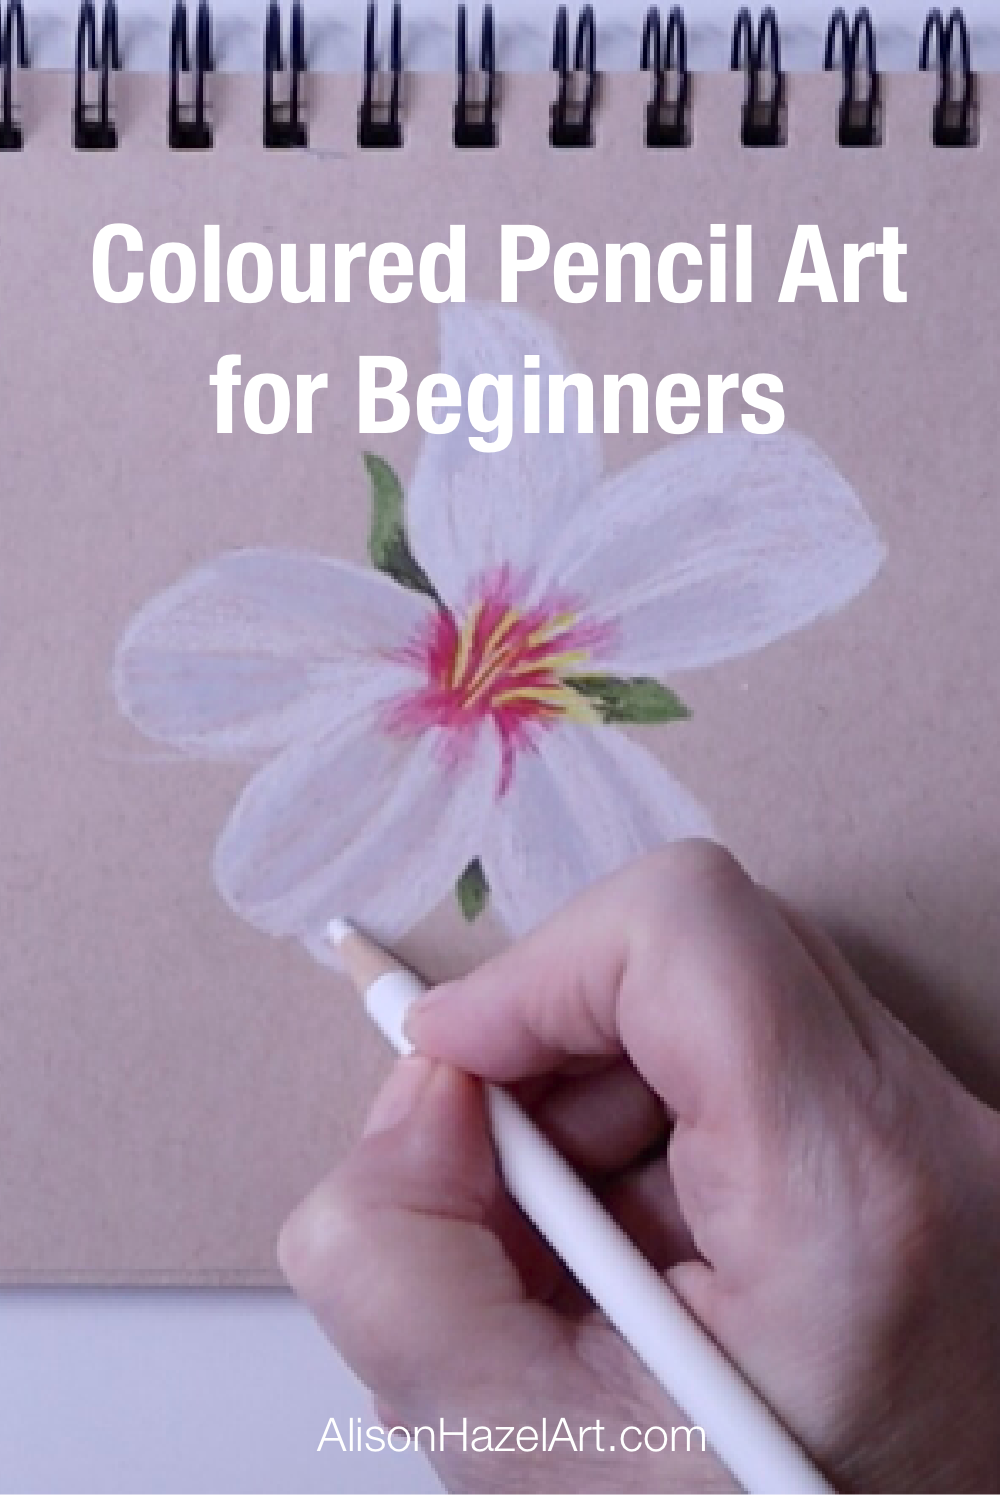 Coloured pencil art